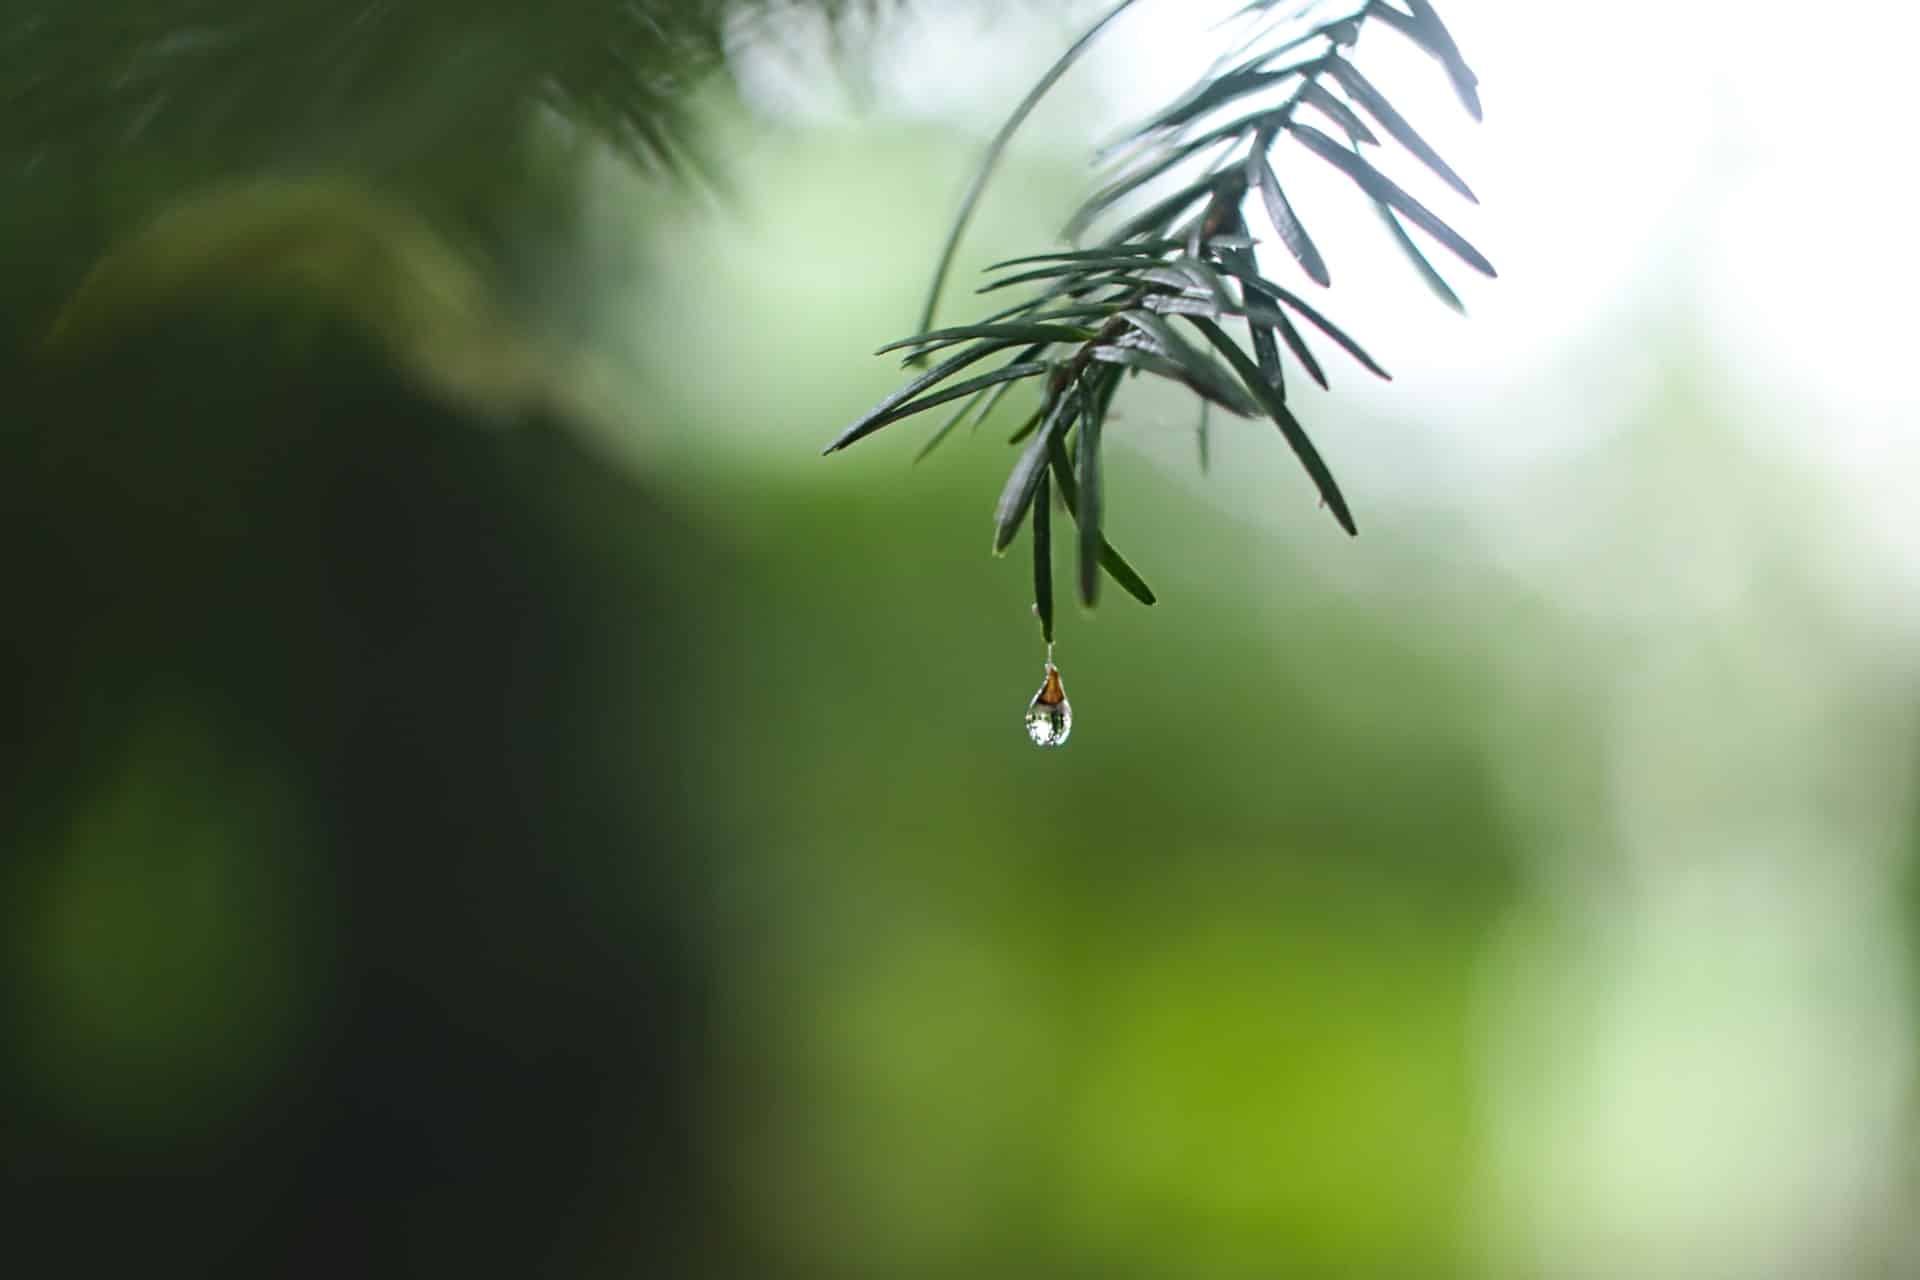 Rain droplets on pine needles